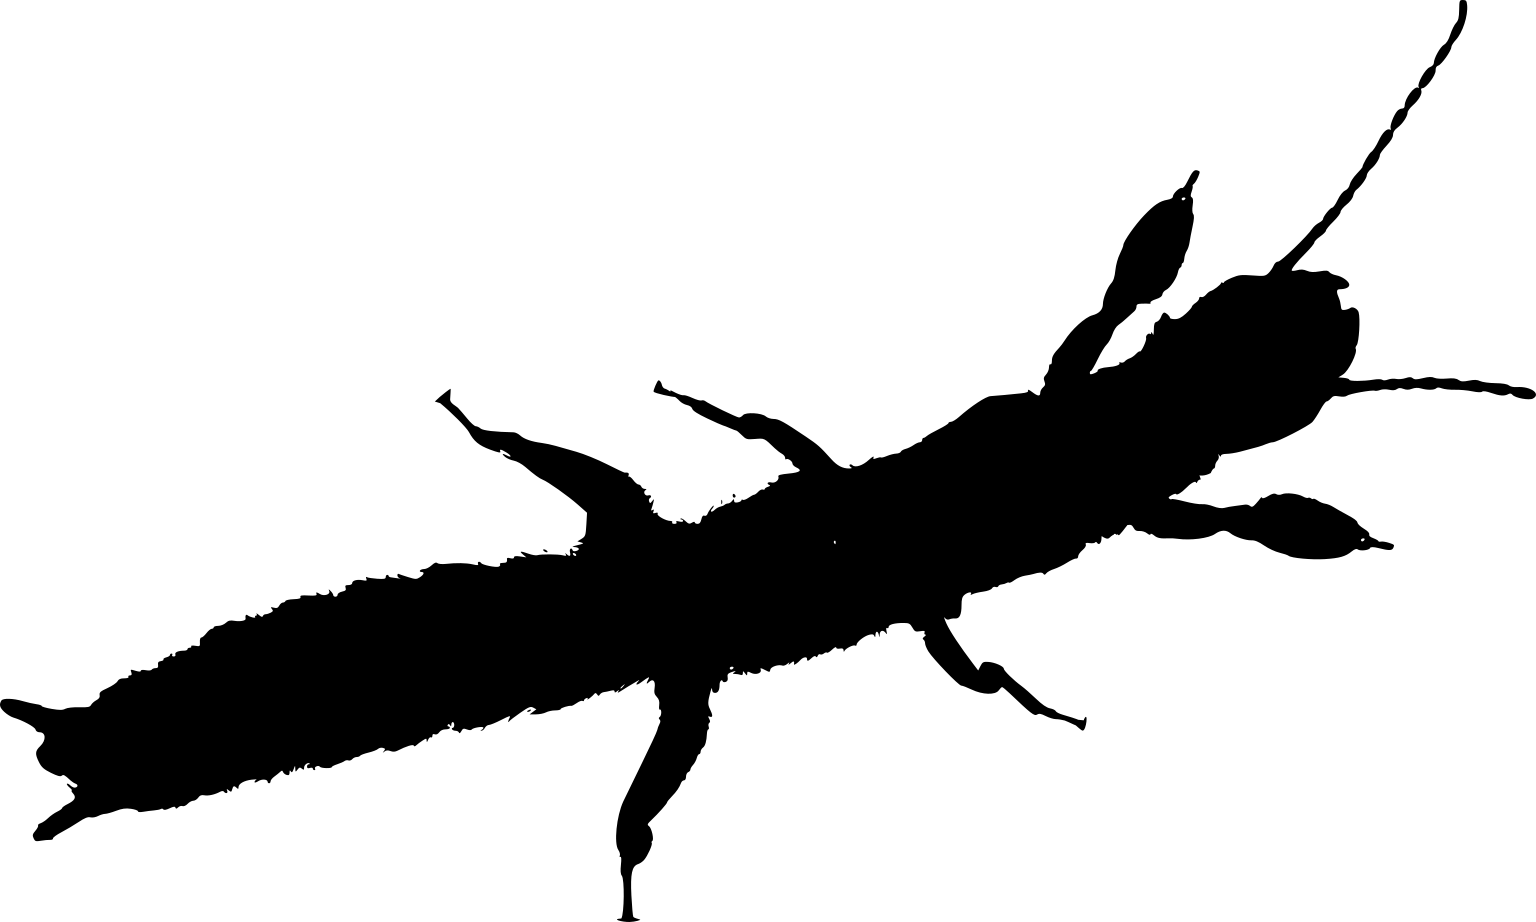 Aposthonia ceylonica